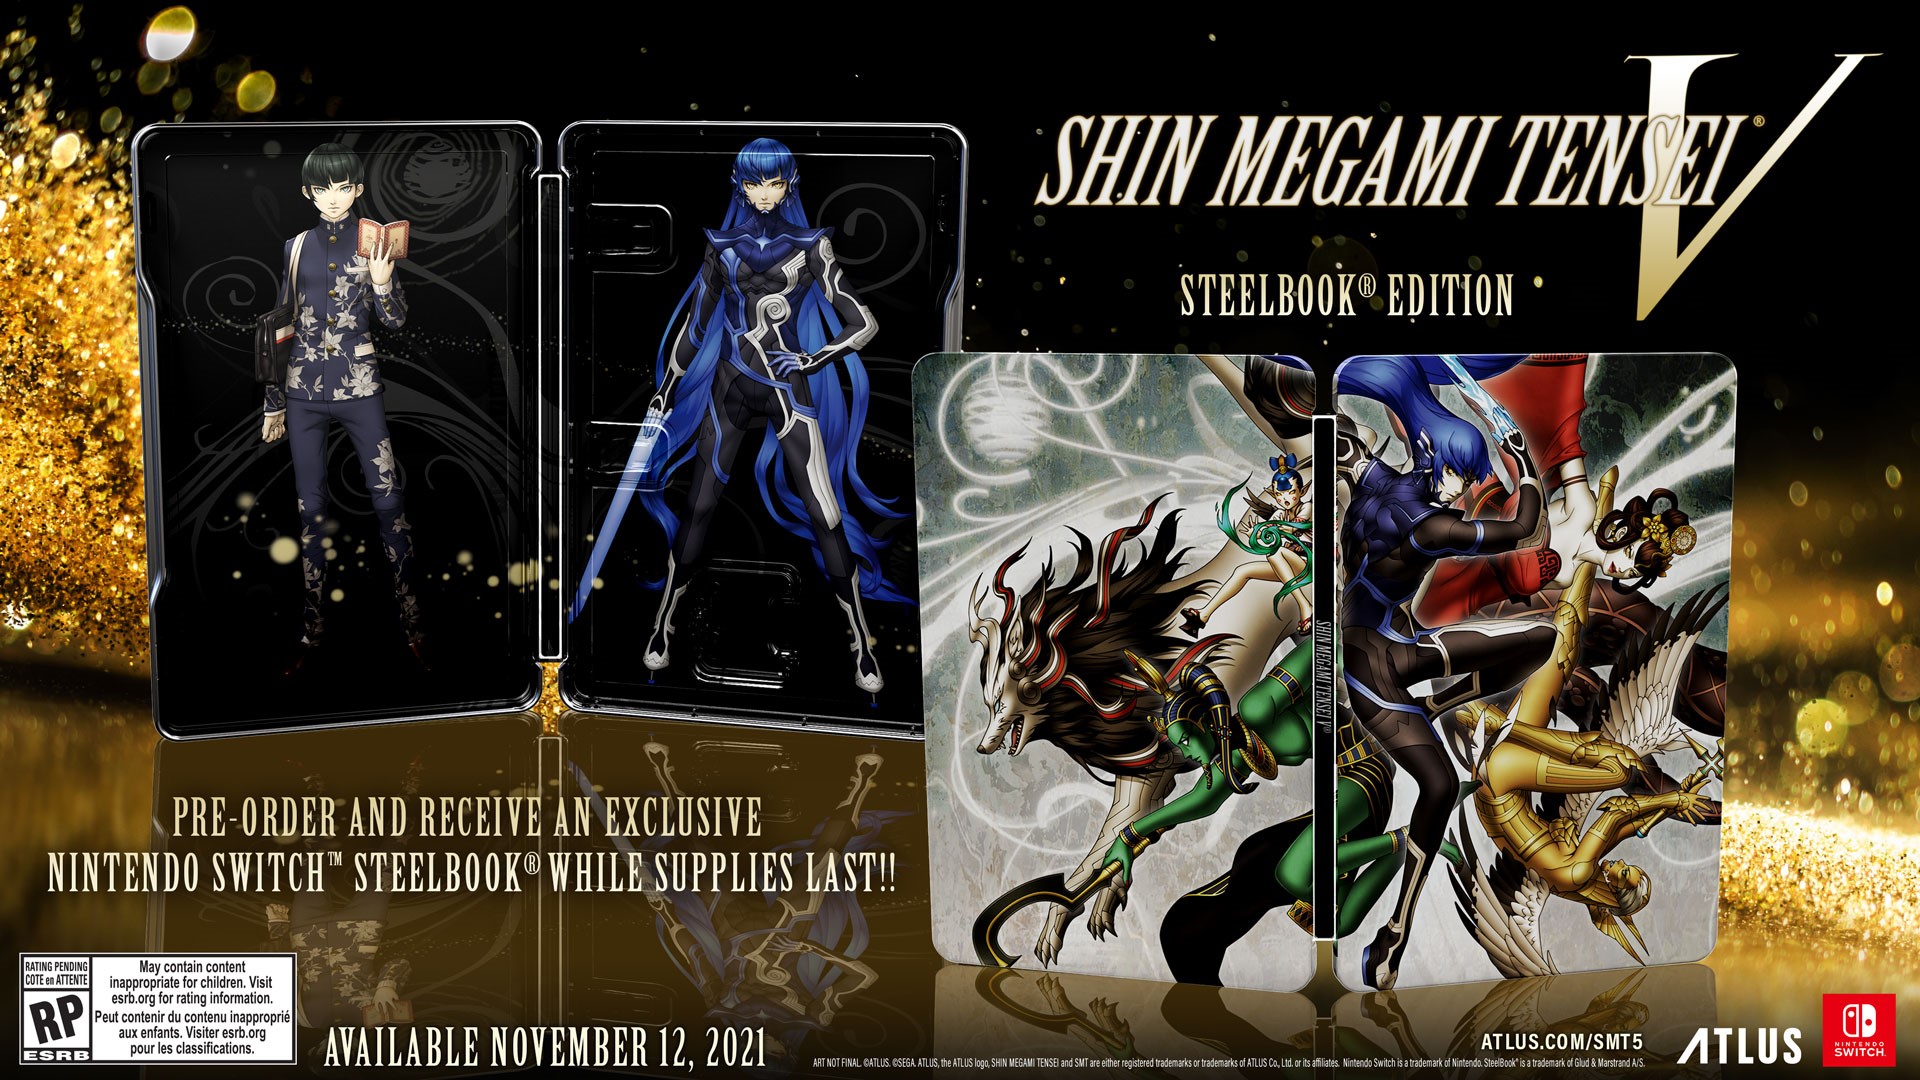 Shin Megami Tensei V SteelBook and Fall of Man Editions